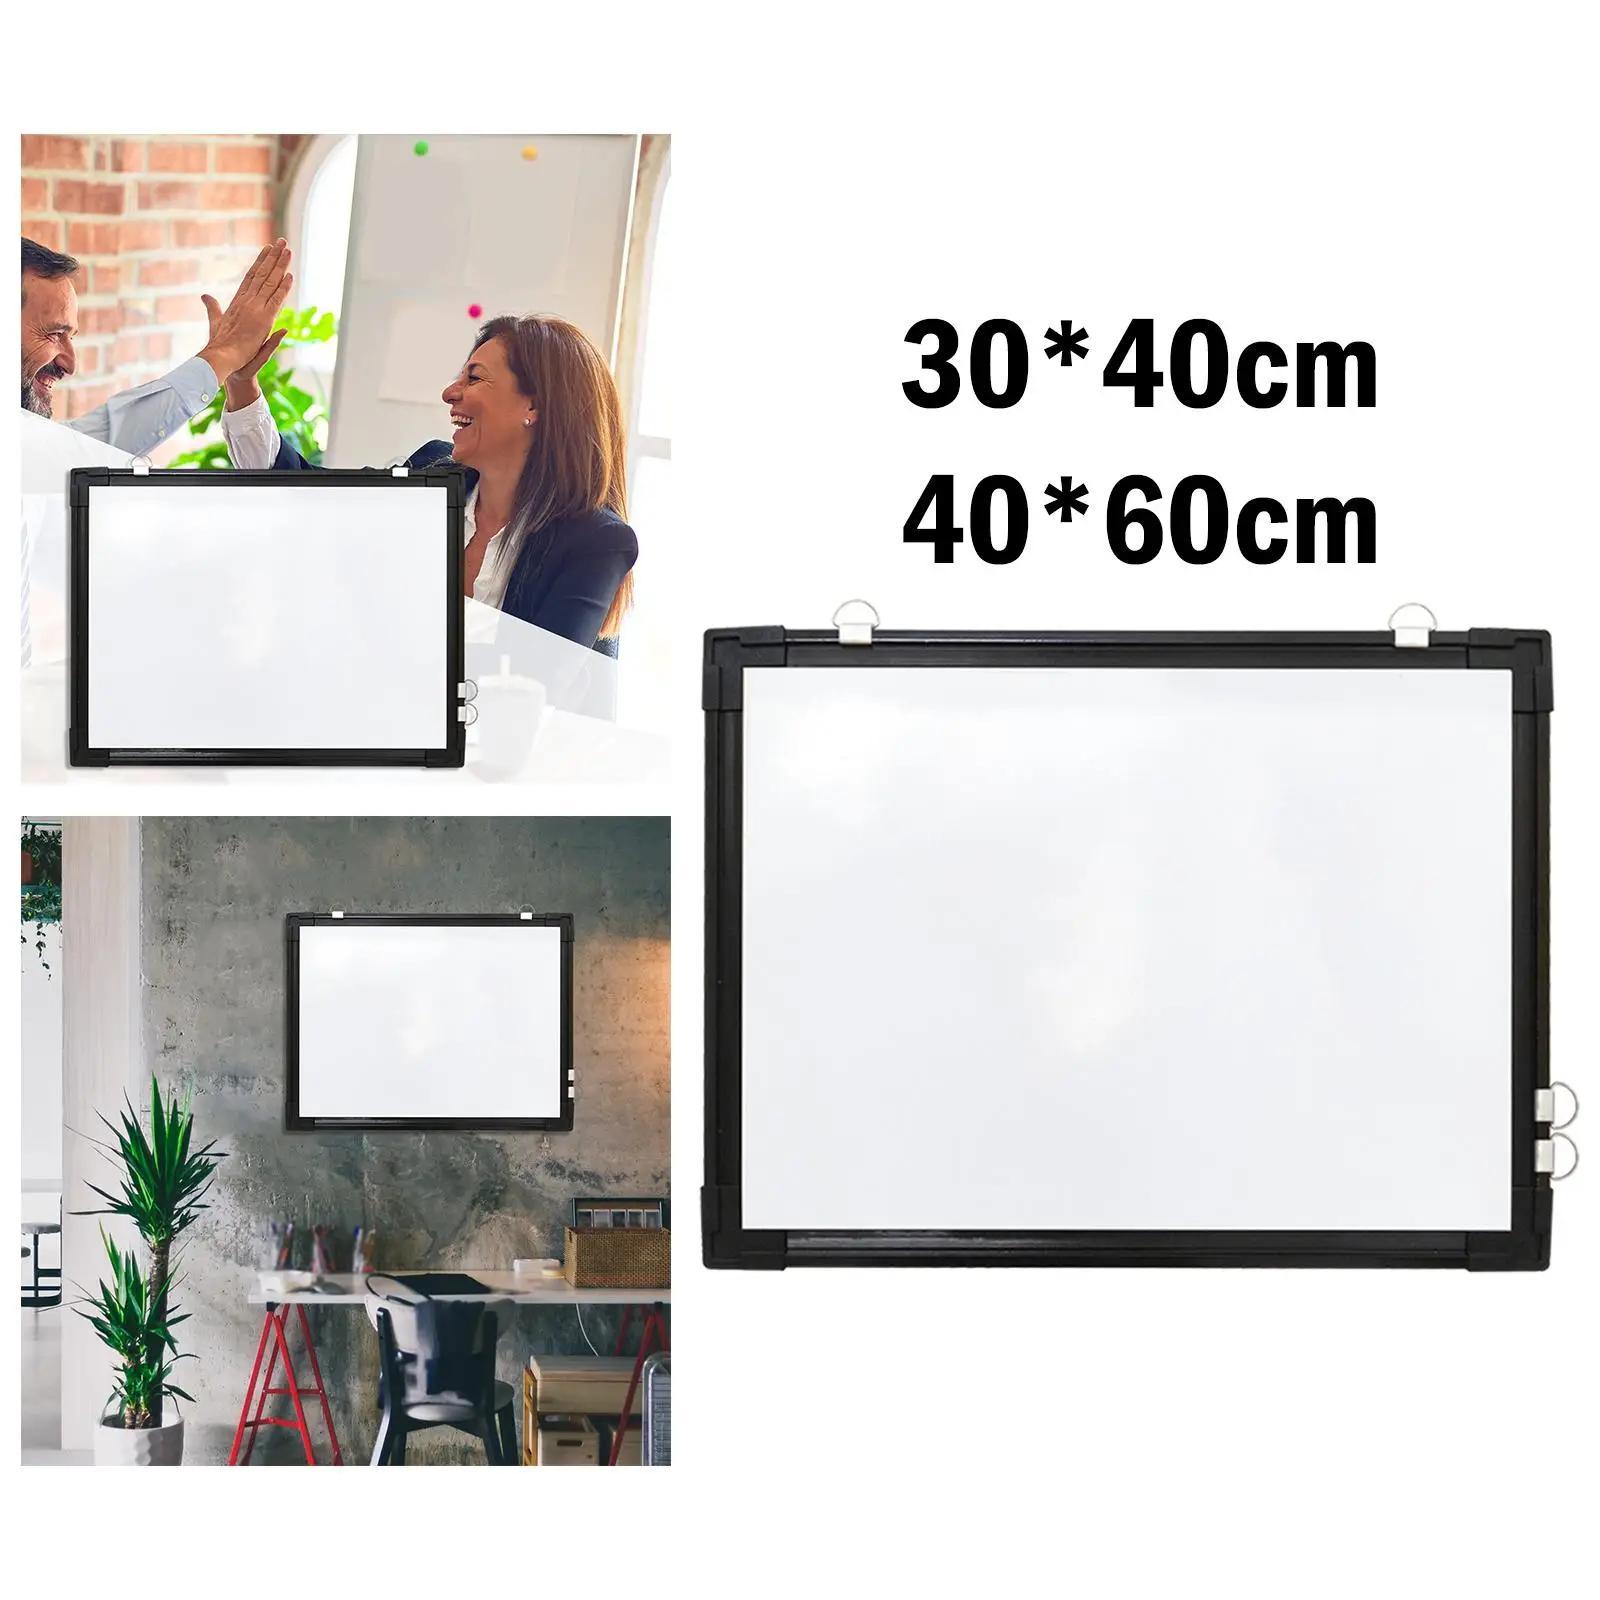 Double Sided Magnetic Whiteboard Aluminium Frame Wall Hanging Dry Erase White